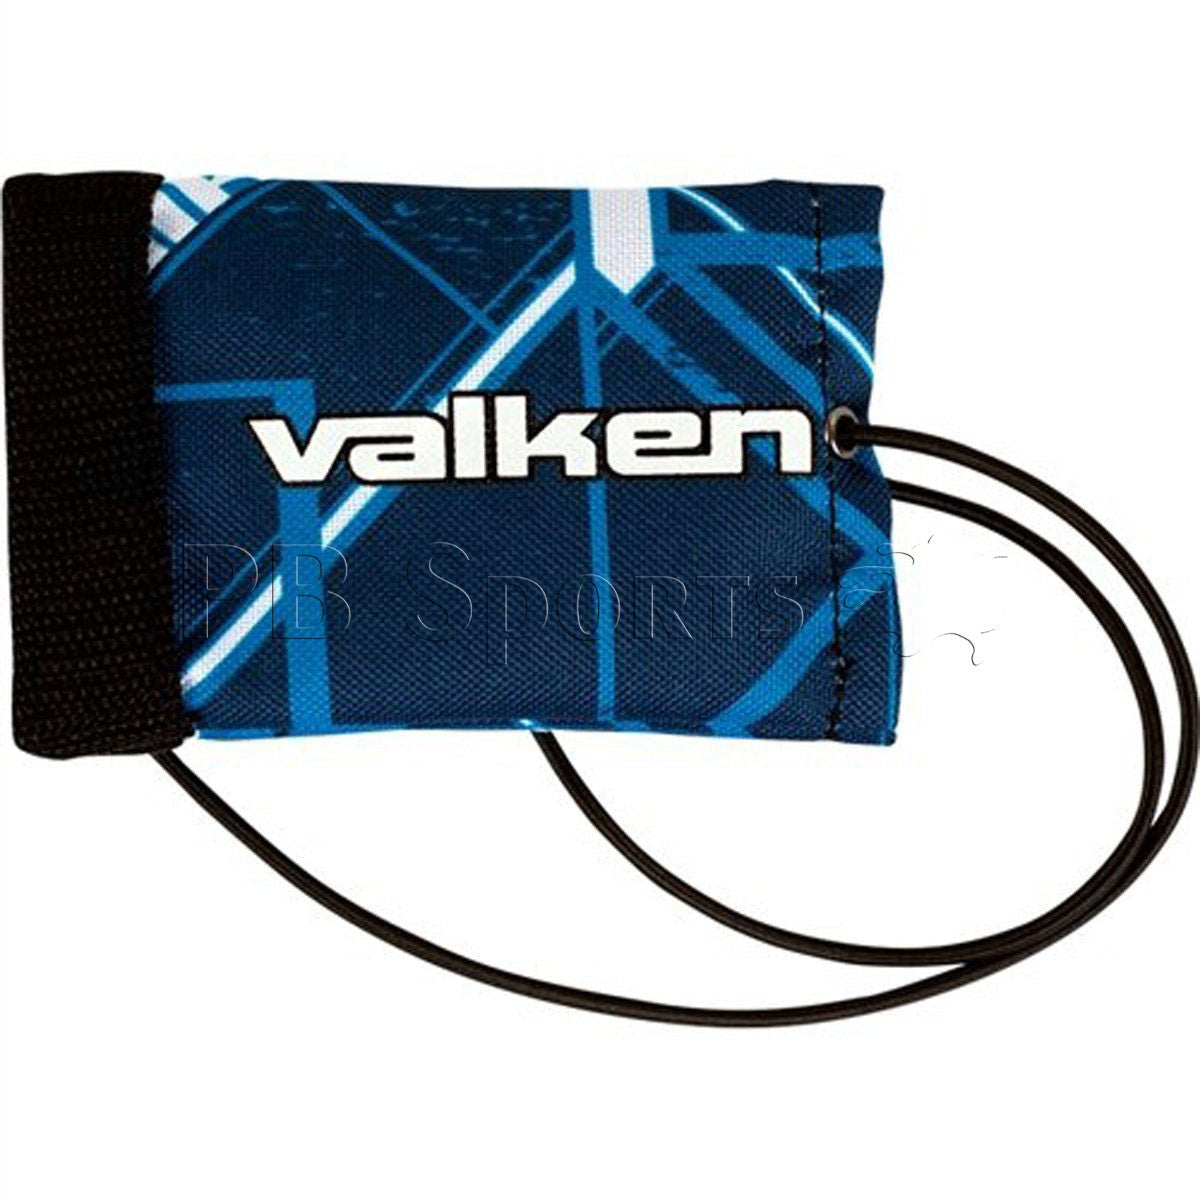 Valken Crusade Hatch Barrel Cover Blue - Valken Paintball